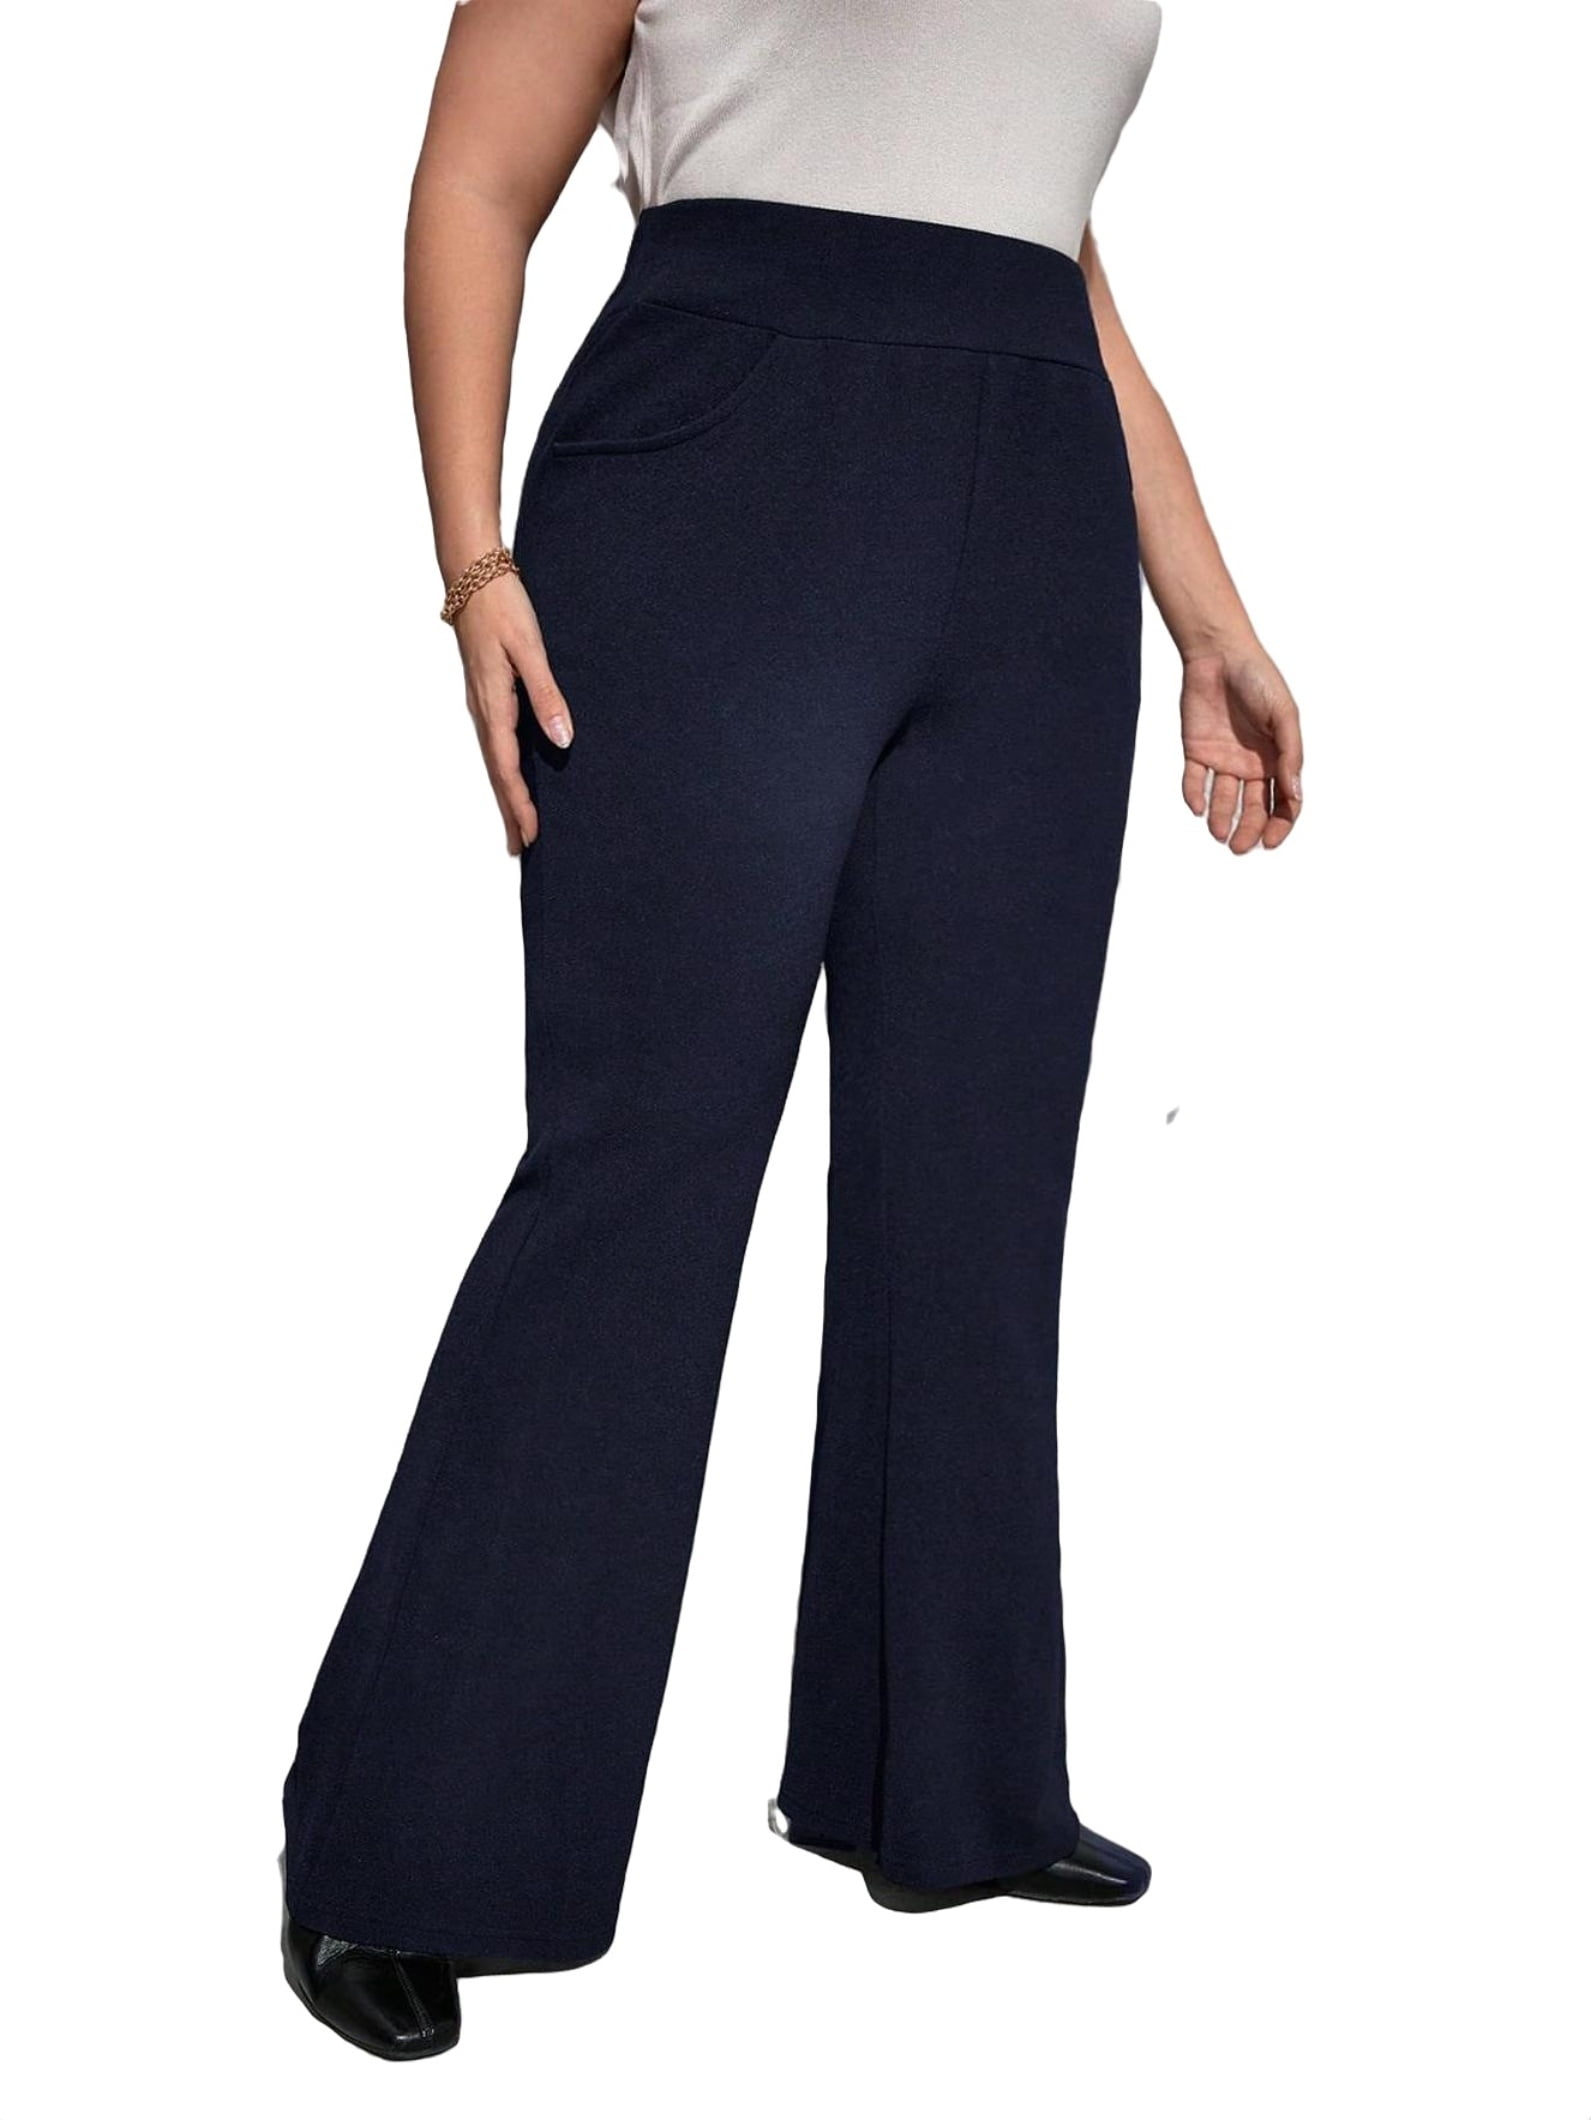 Elegant Flare Leg Navy Blue Plus Size Pants (Women's) - Walmart.com